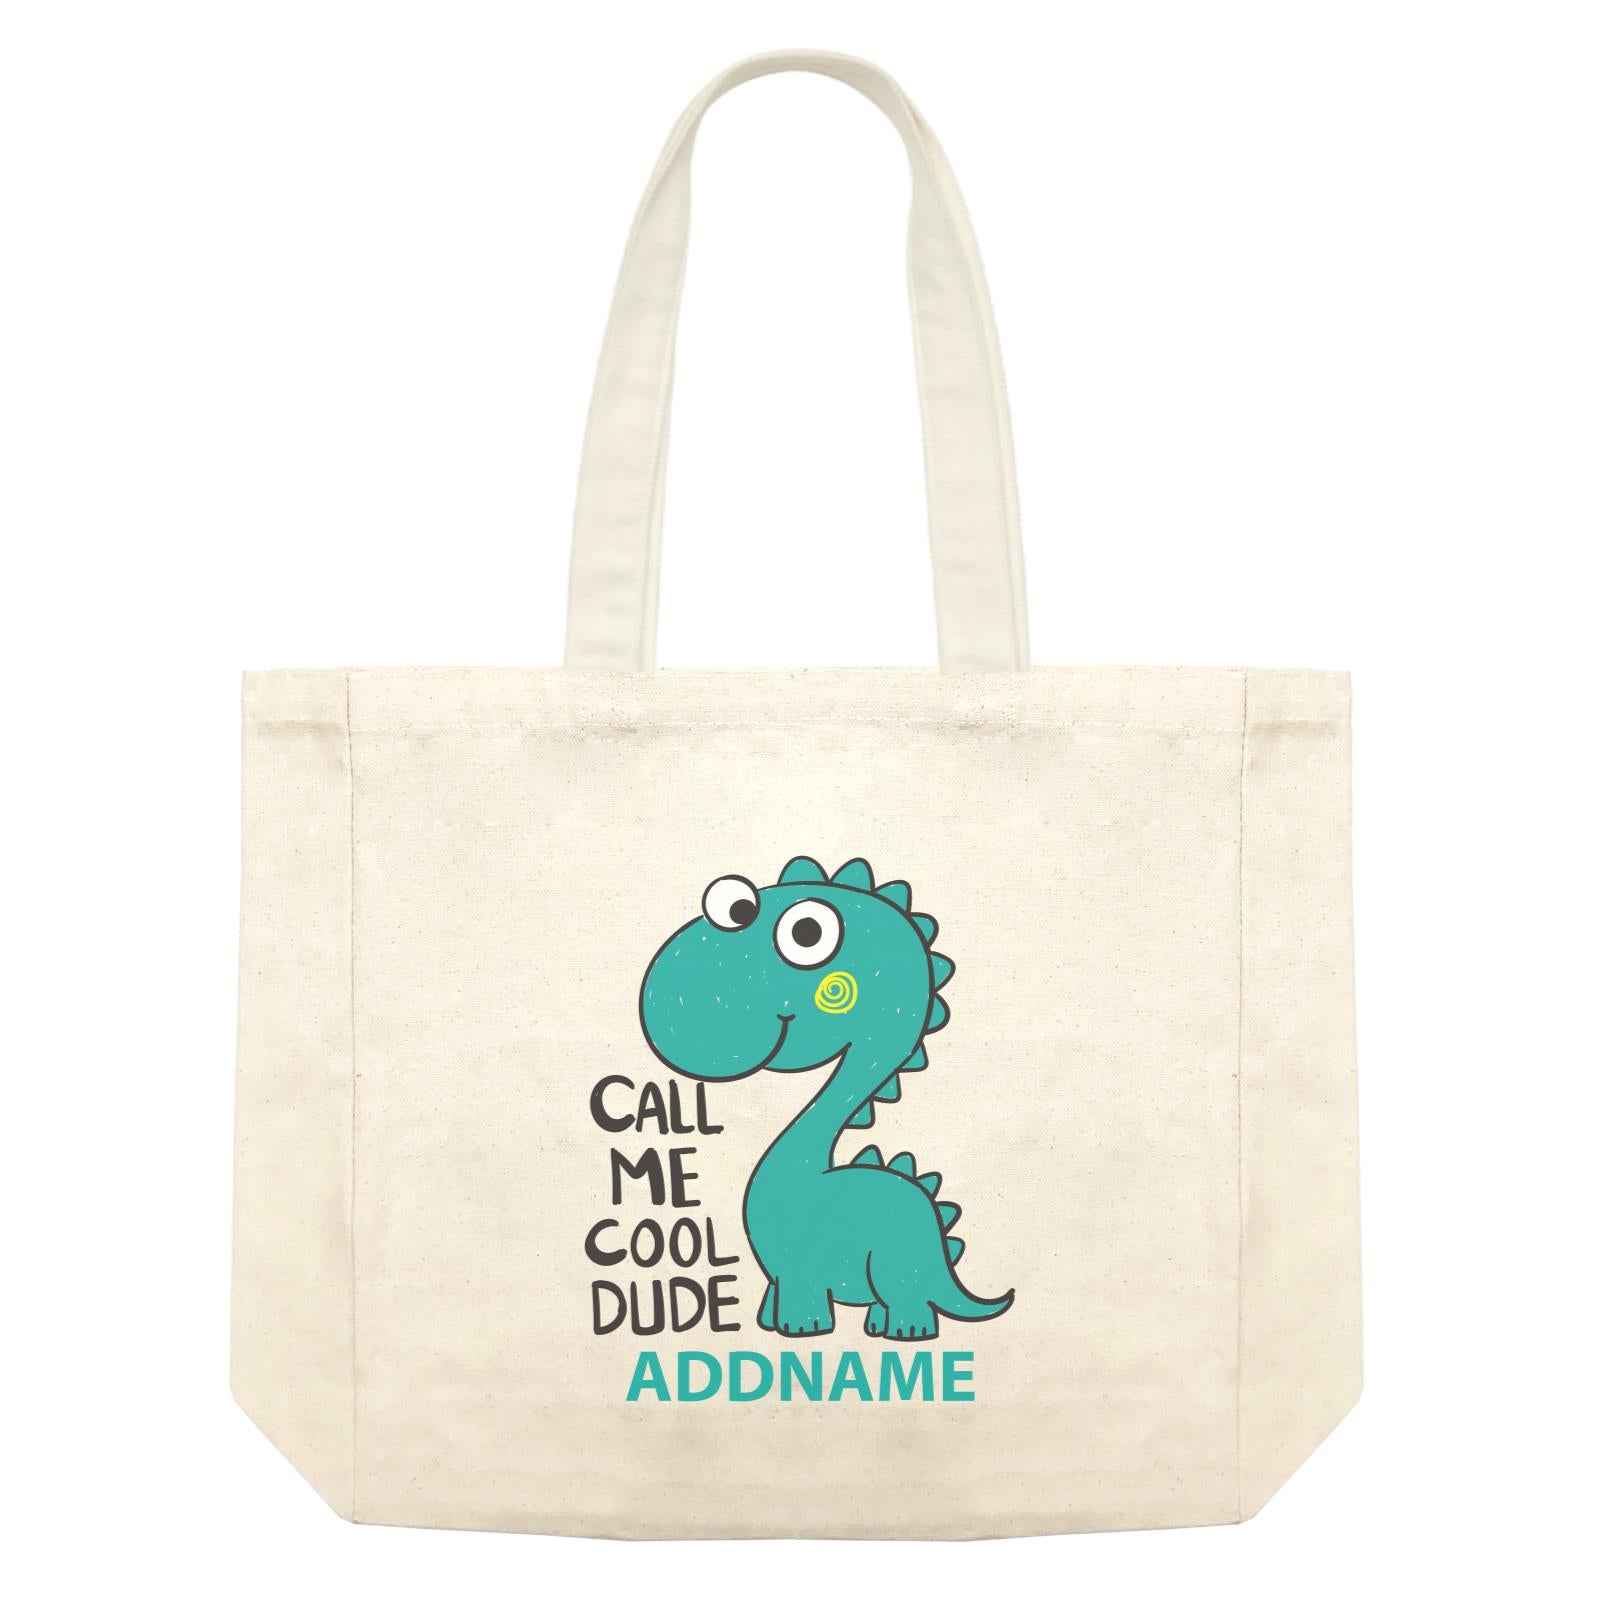 Cool Cute Dinosaur Call Me Cool Dude Addname Shopping Bag